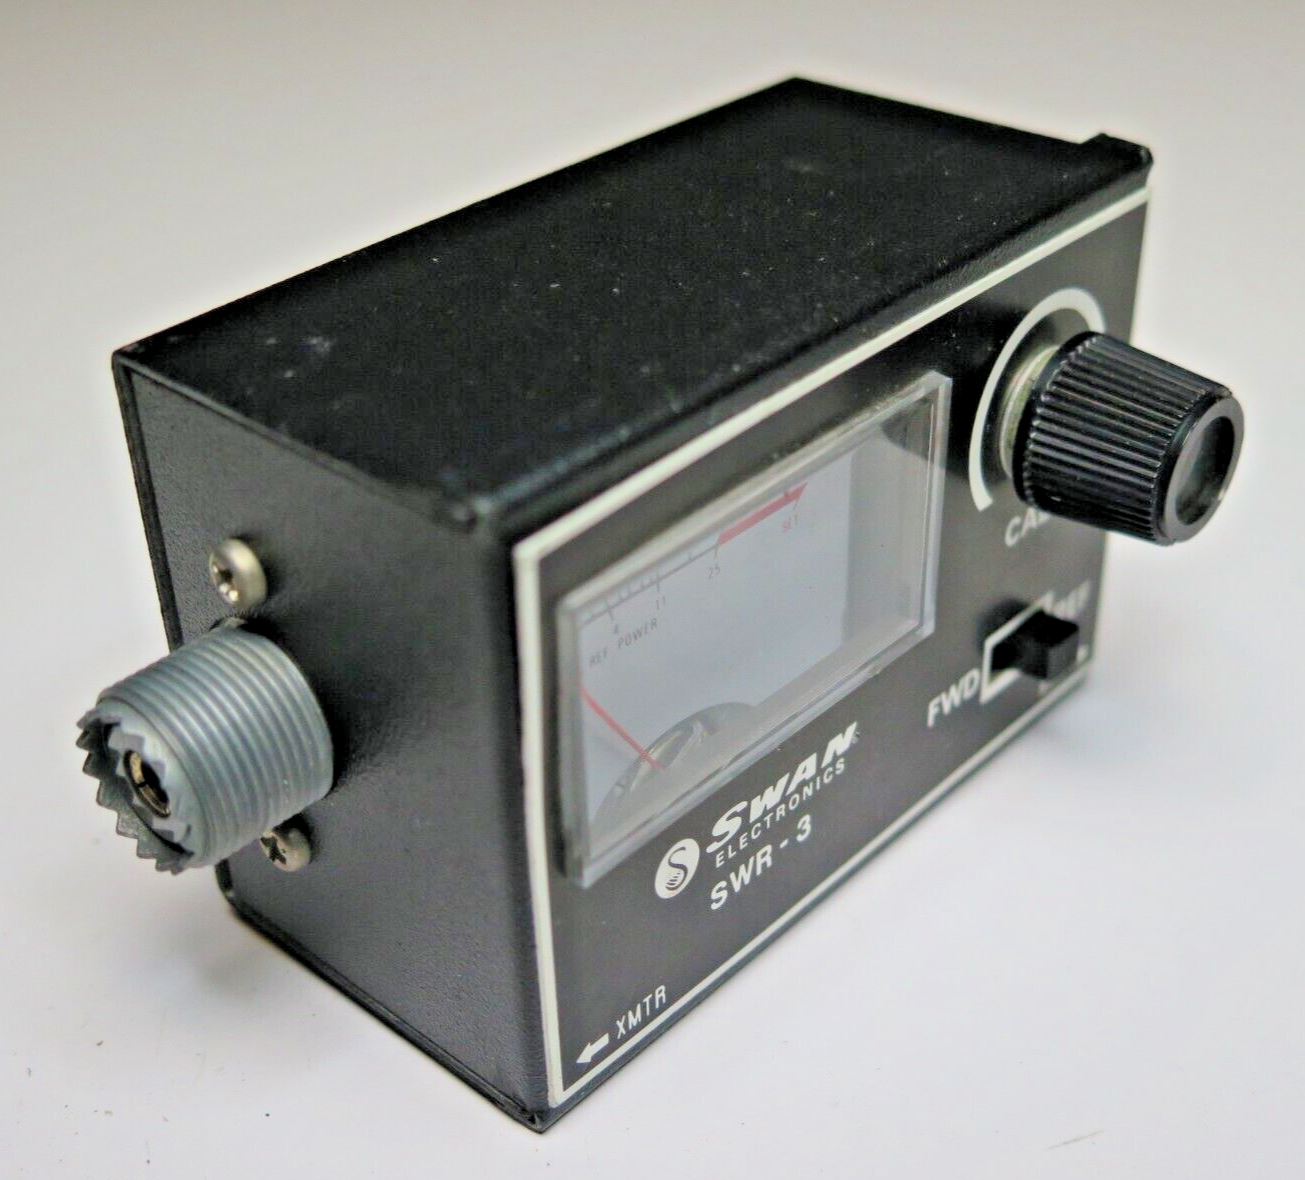 SWAN SWR-3 SWR Meter for HAM / Amateur Radio